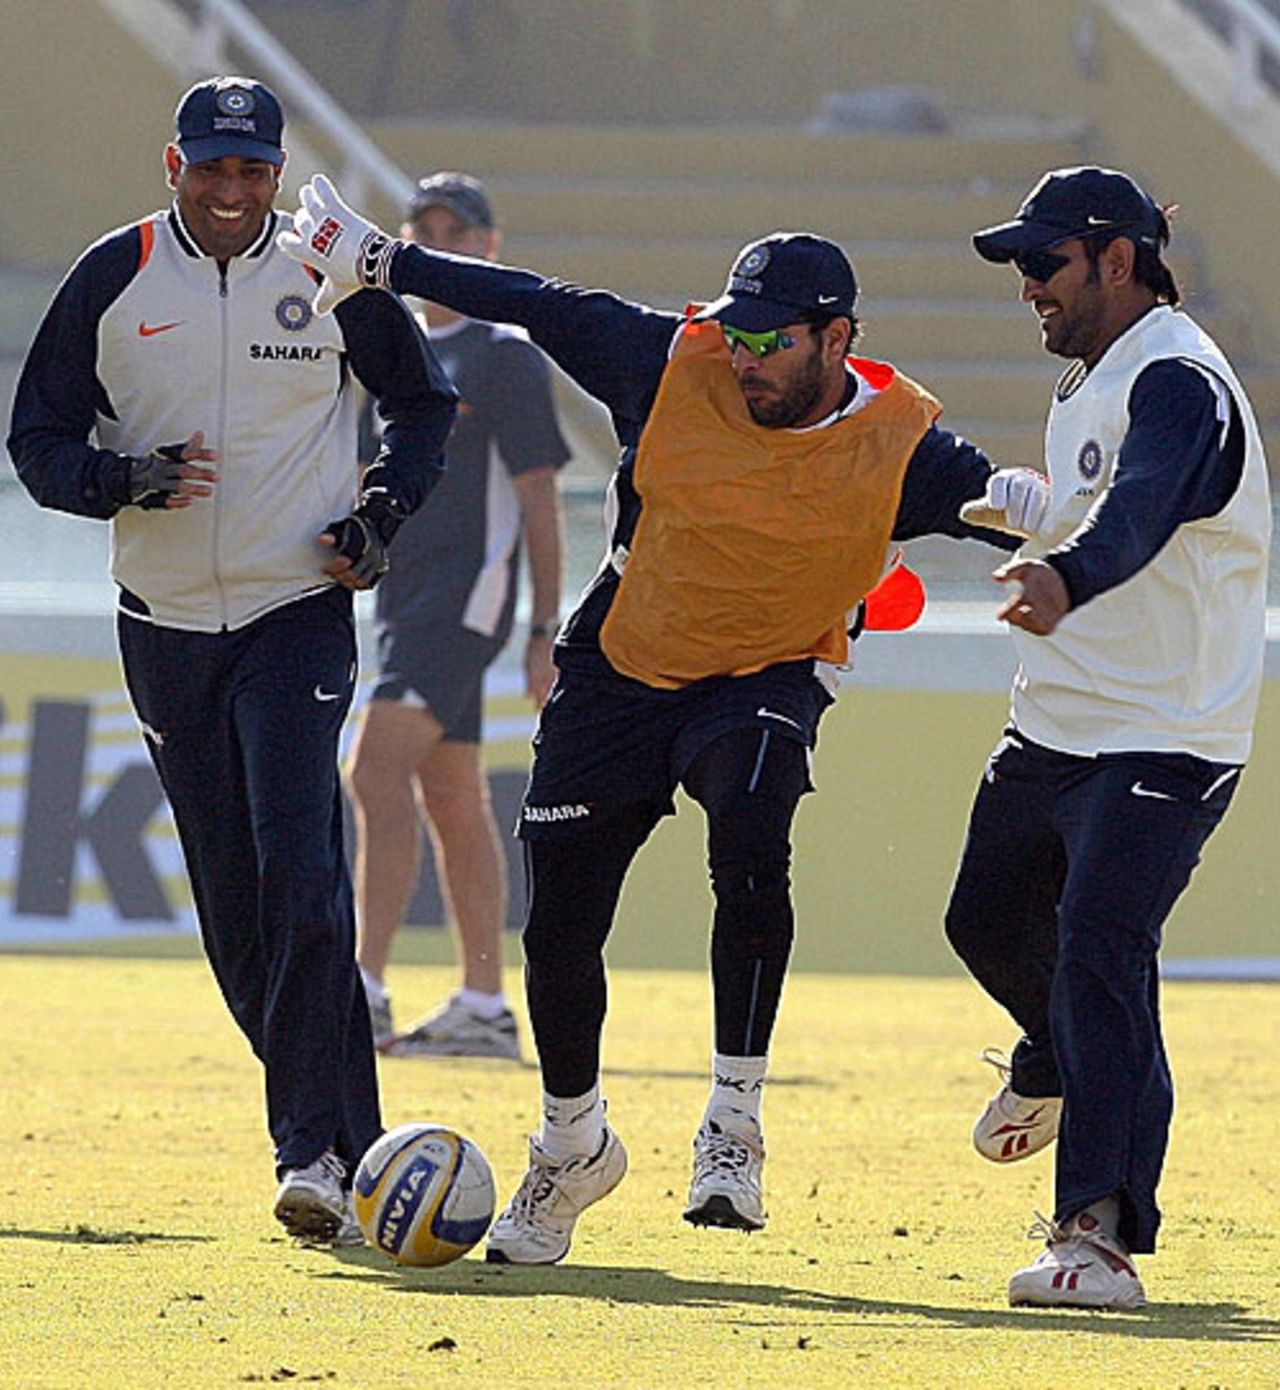 VVS Laxman, Yuvraj Singh and Mahendra Singh Dhoni have fun with soccer, Mohali, December 18, 2008